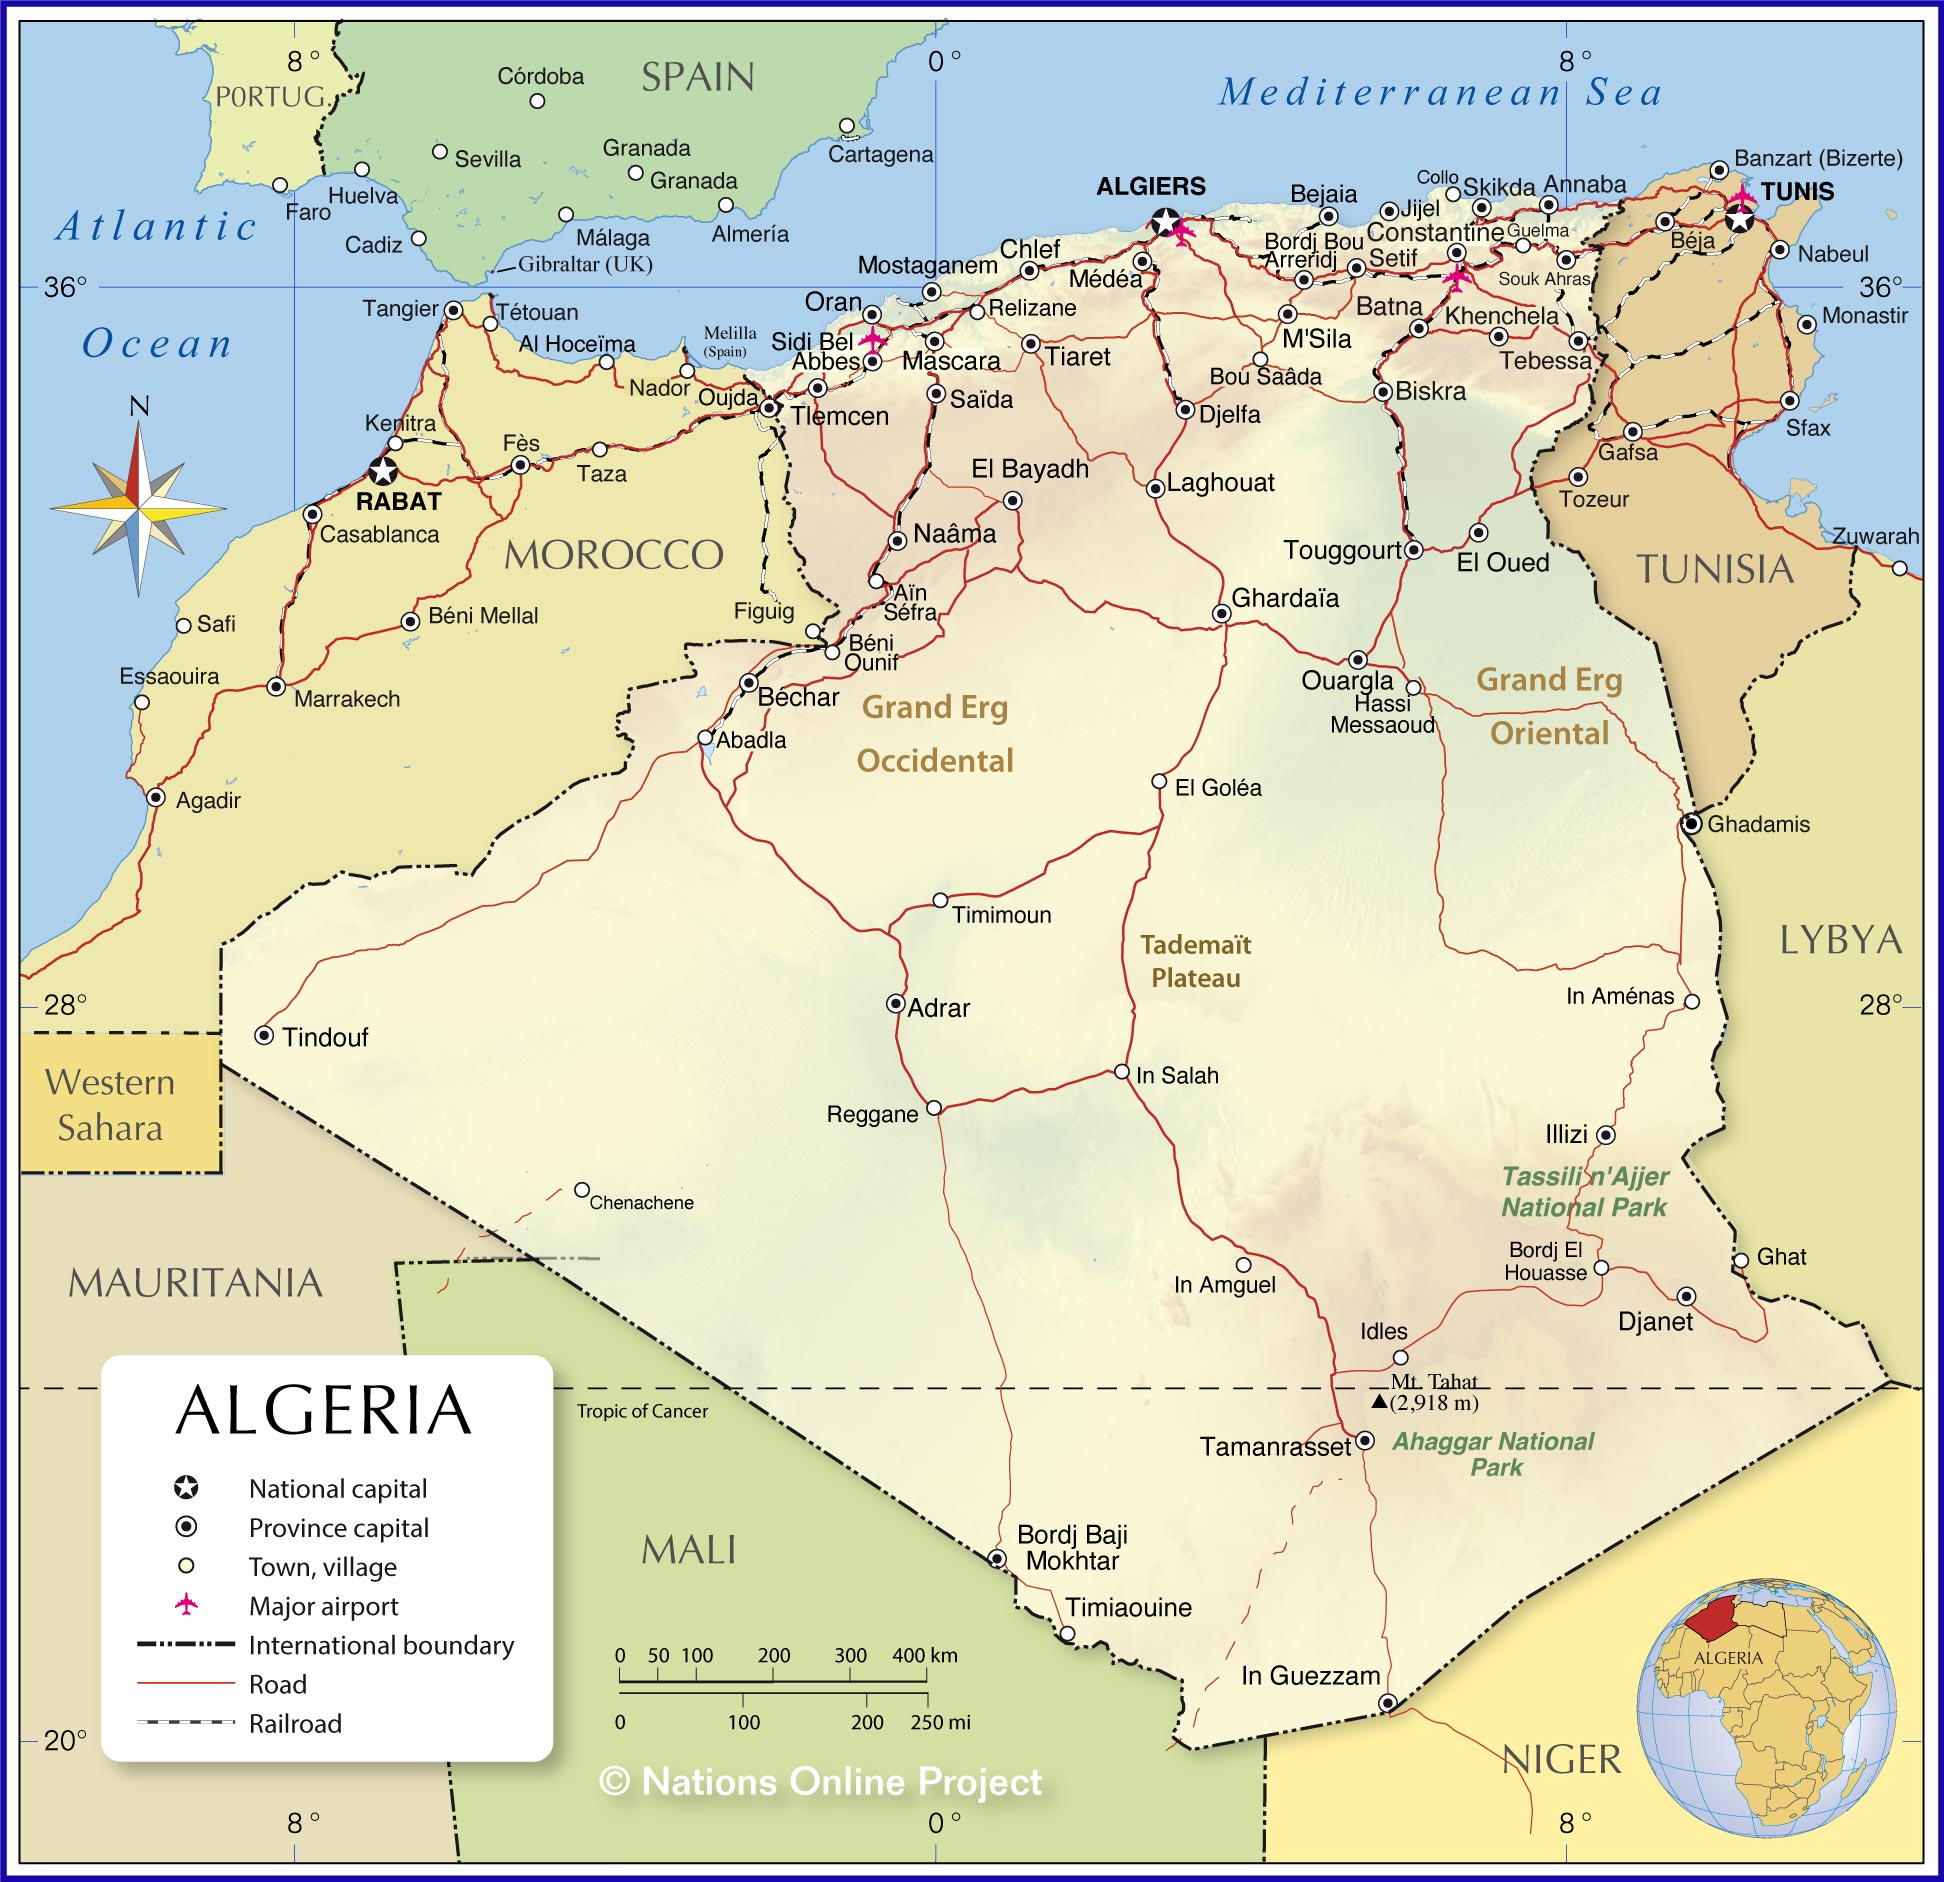 The political Map of Algeria shows Algeria and neighboring countries.